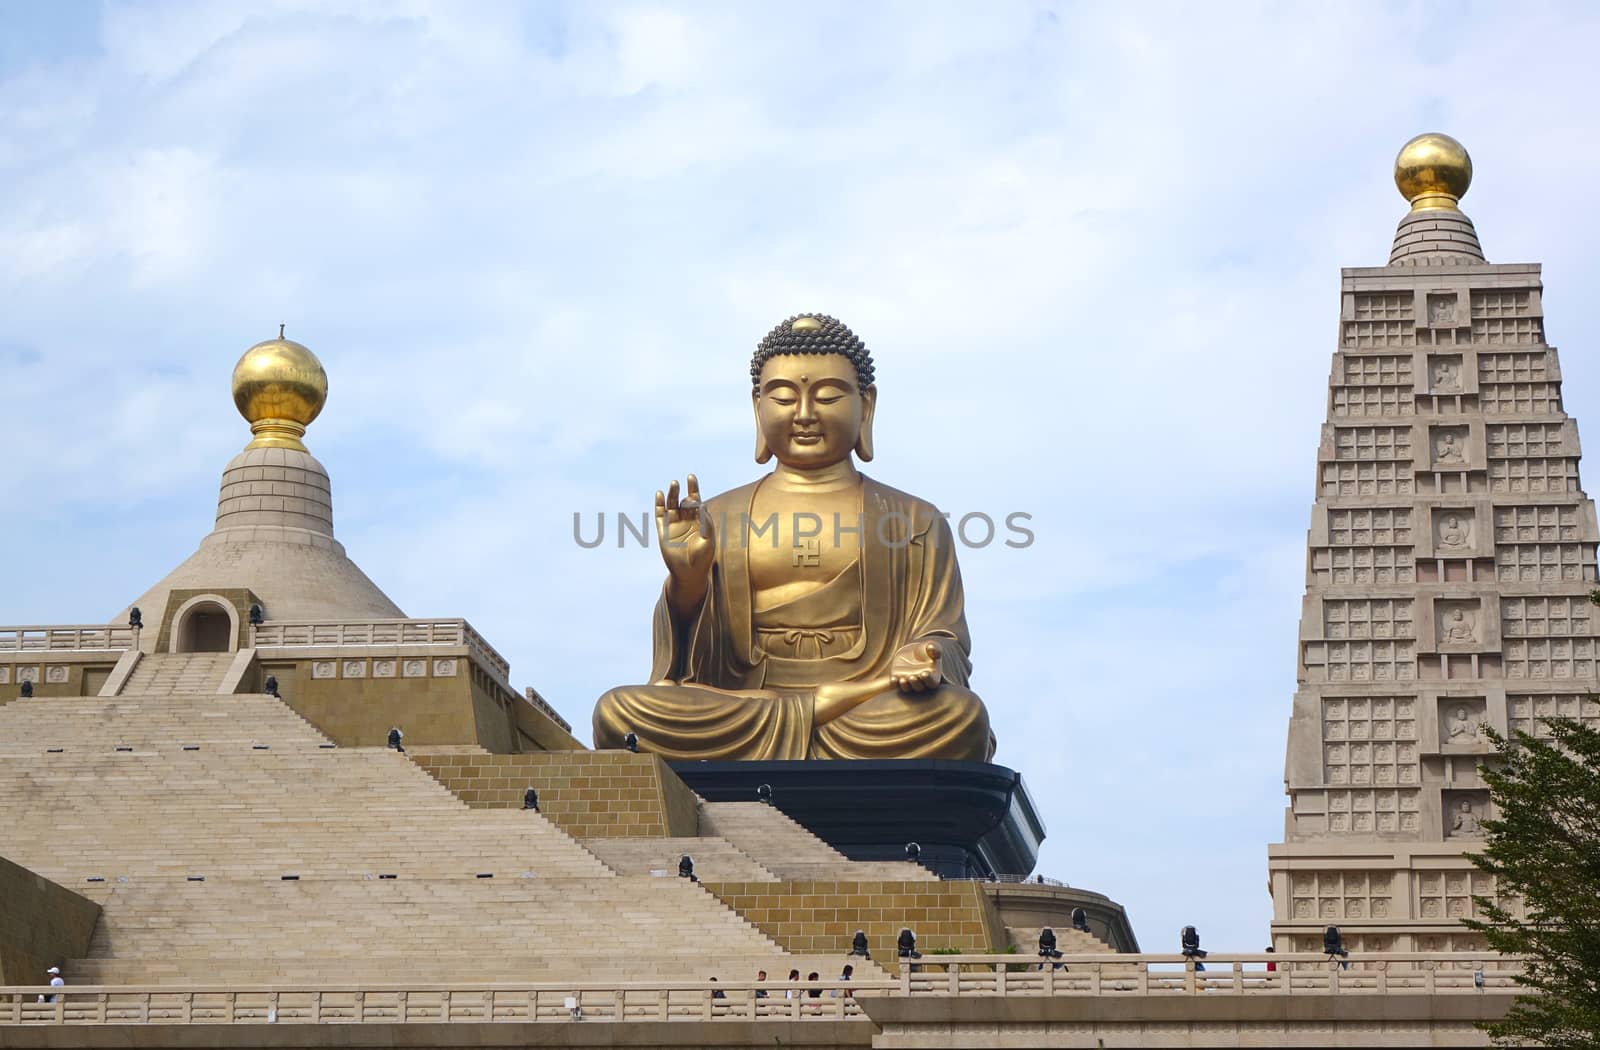 Giant Buddha Statue in Taiwan by shiyali